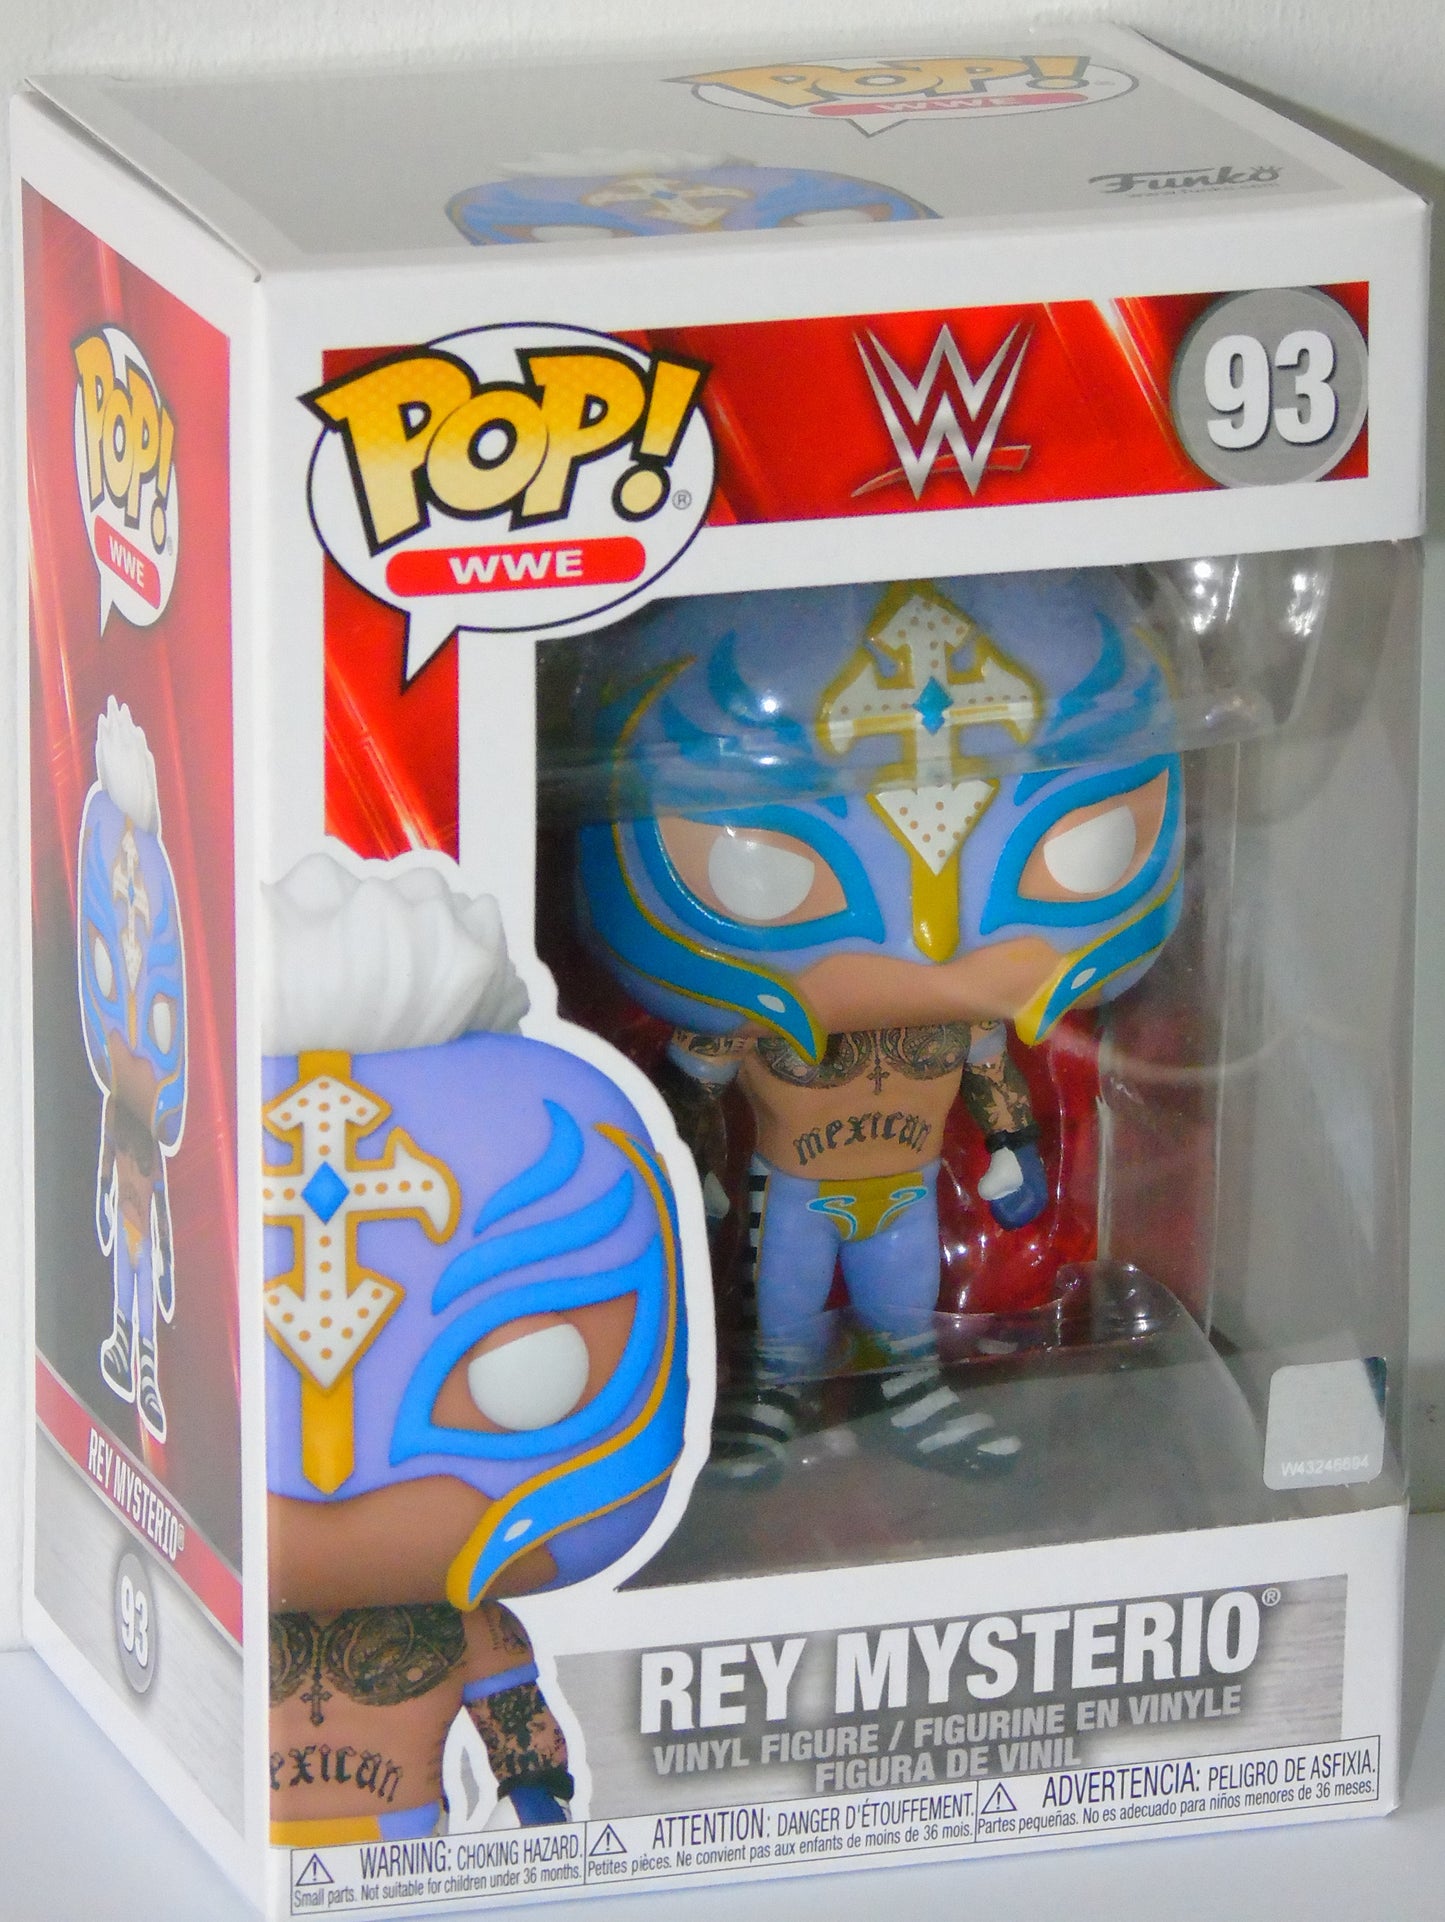 Rey Mysterio WWE Funko Pop! Vinyl Figure